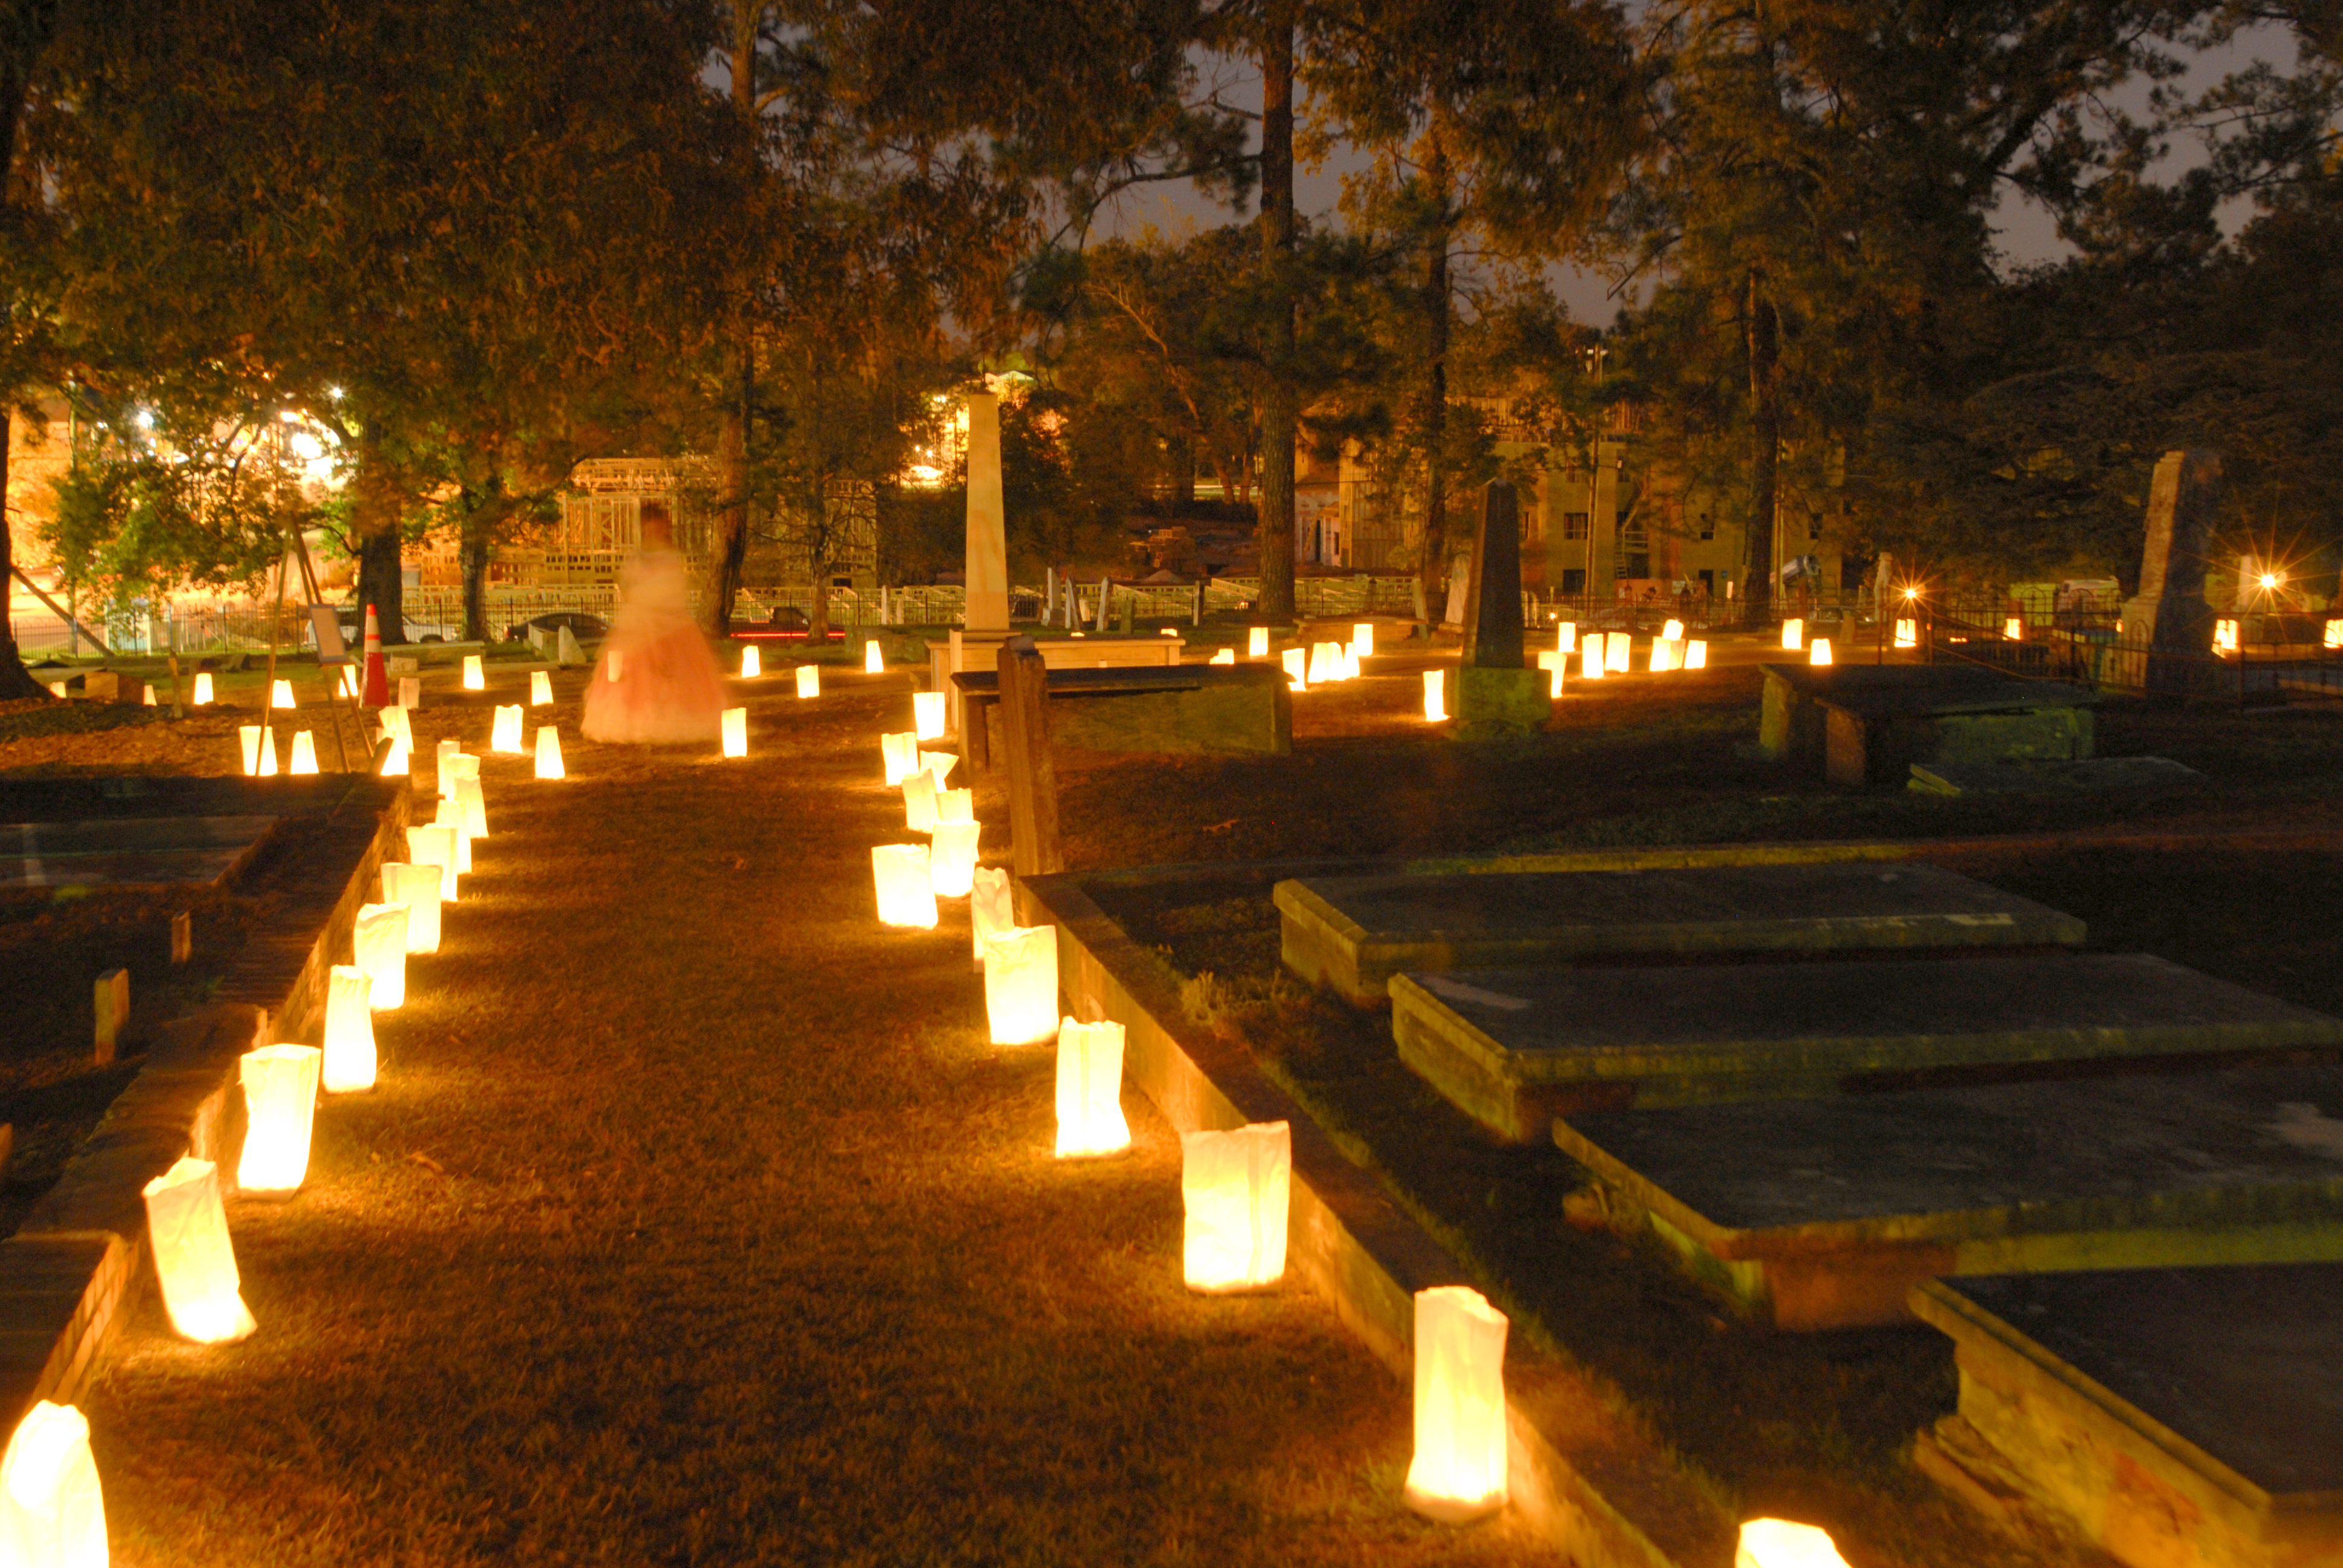 Annual cemetery tour on Oct. 17 and 18 illuminates Auburn’s rich heritage, past